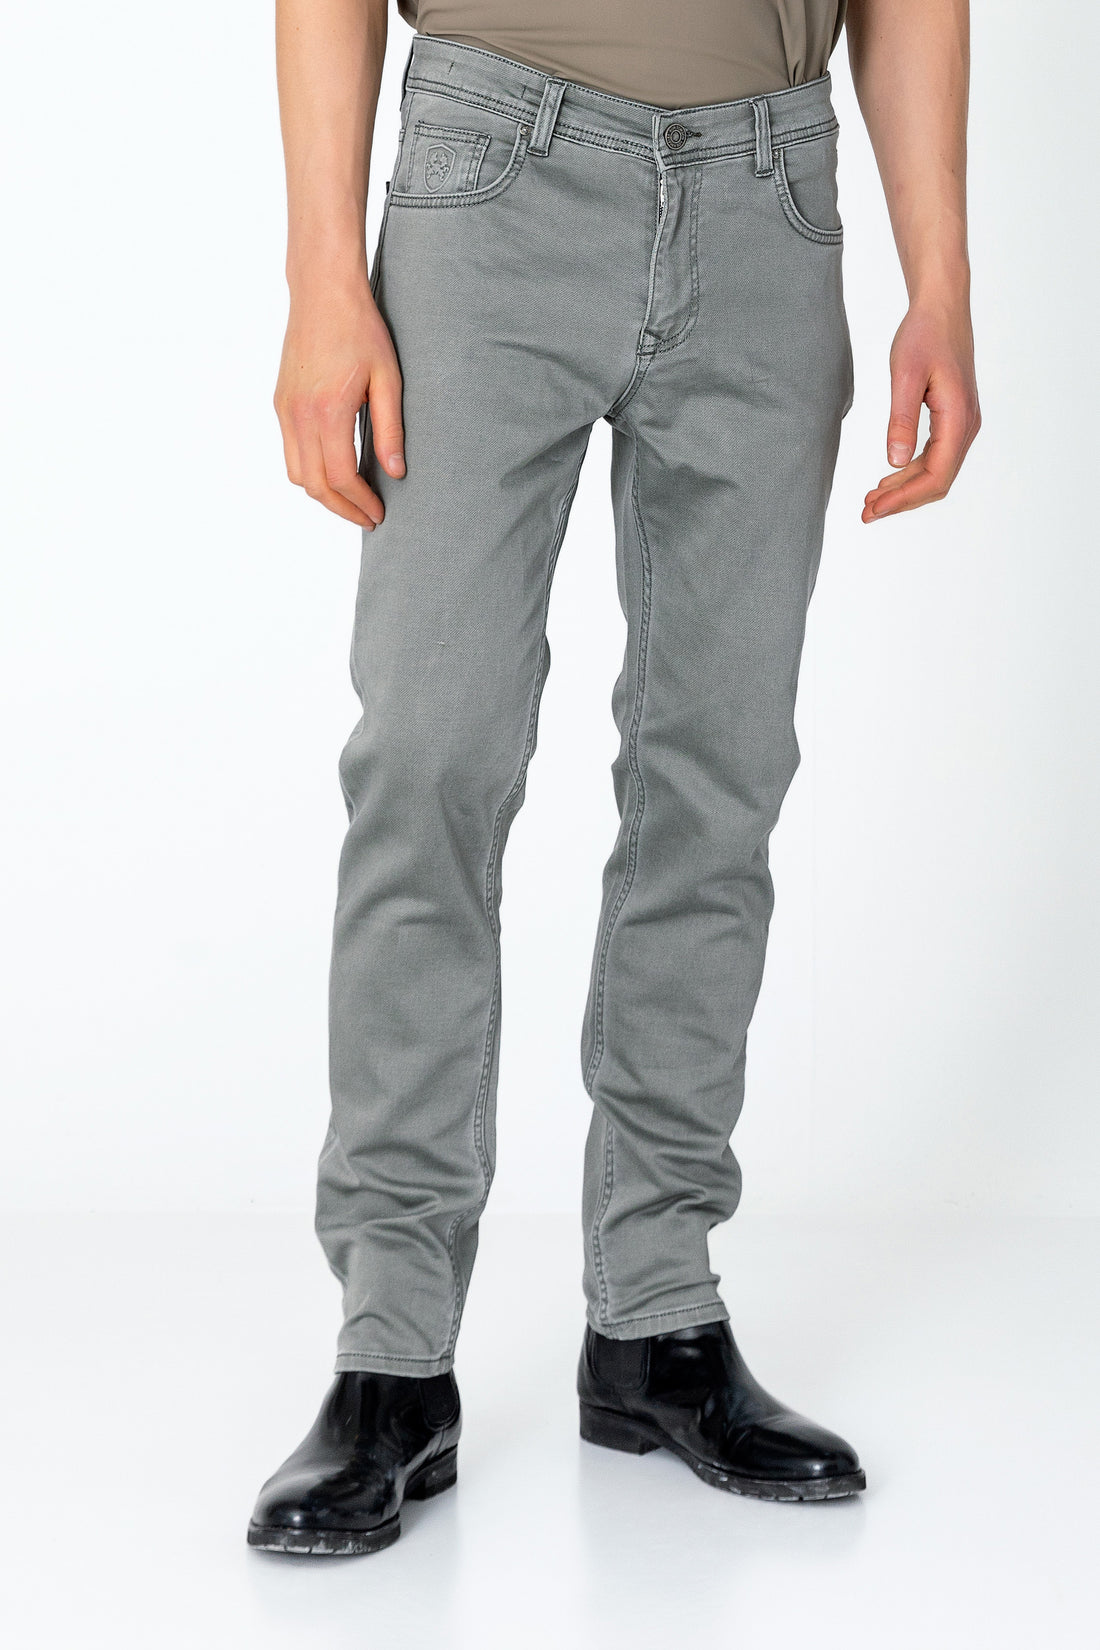 Super Soft 5-pocket Style Pants - Grey